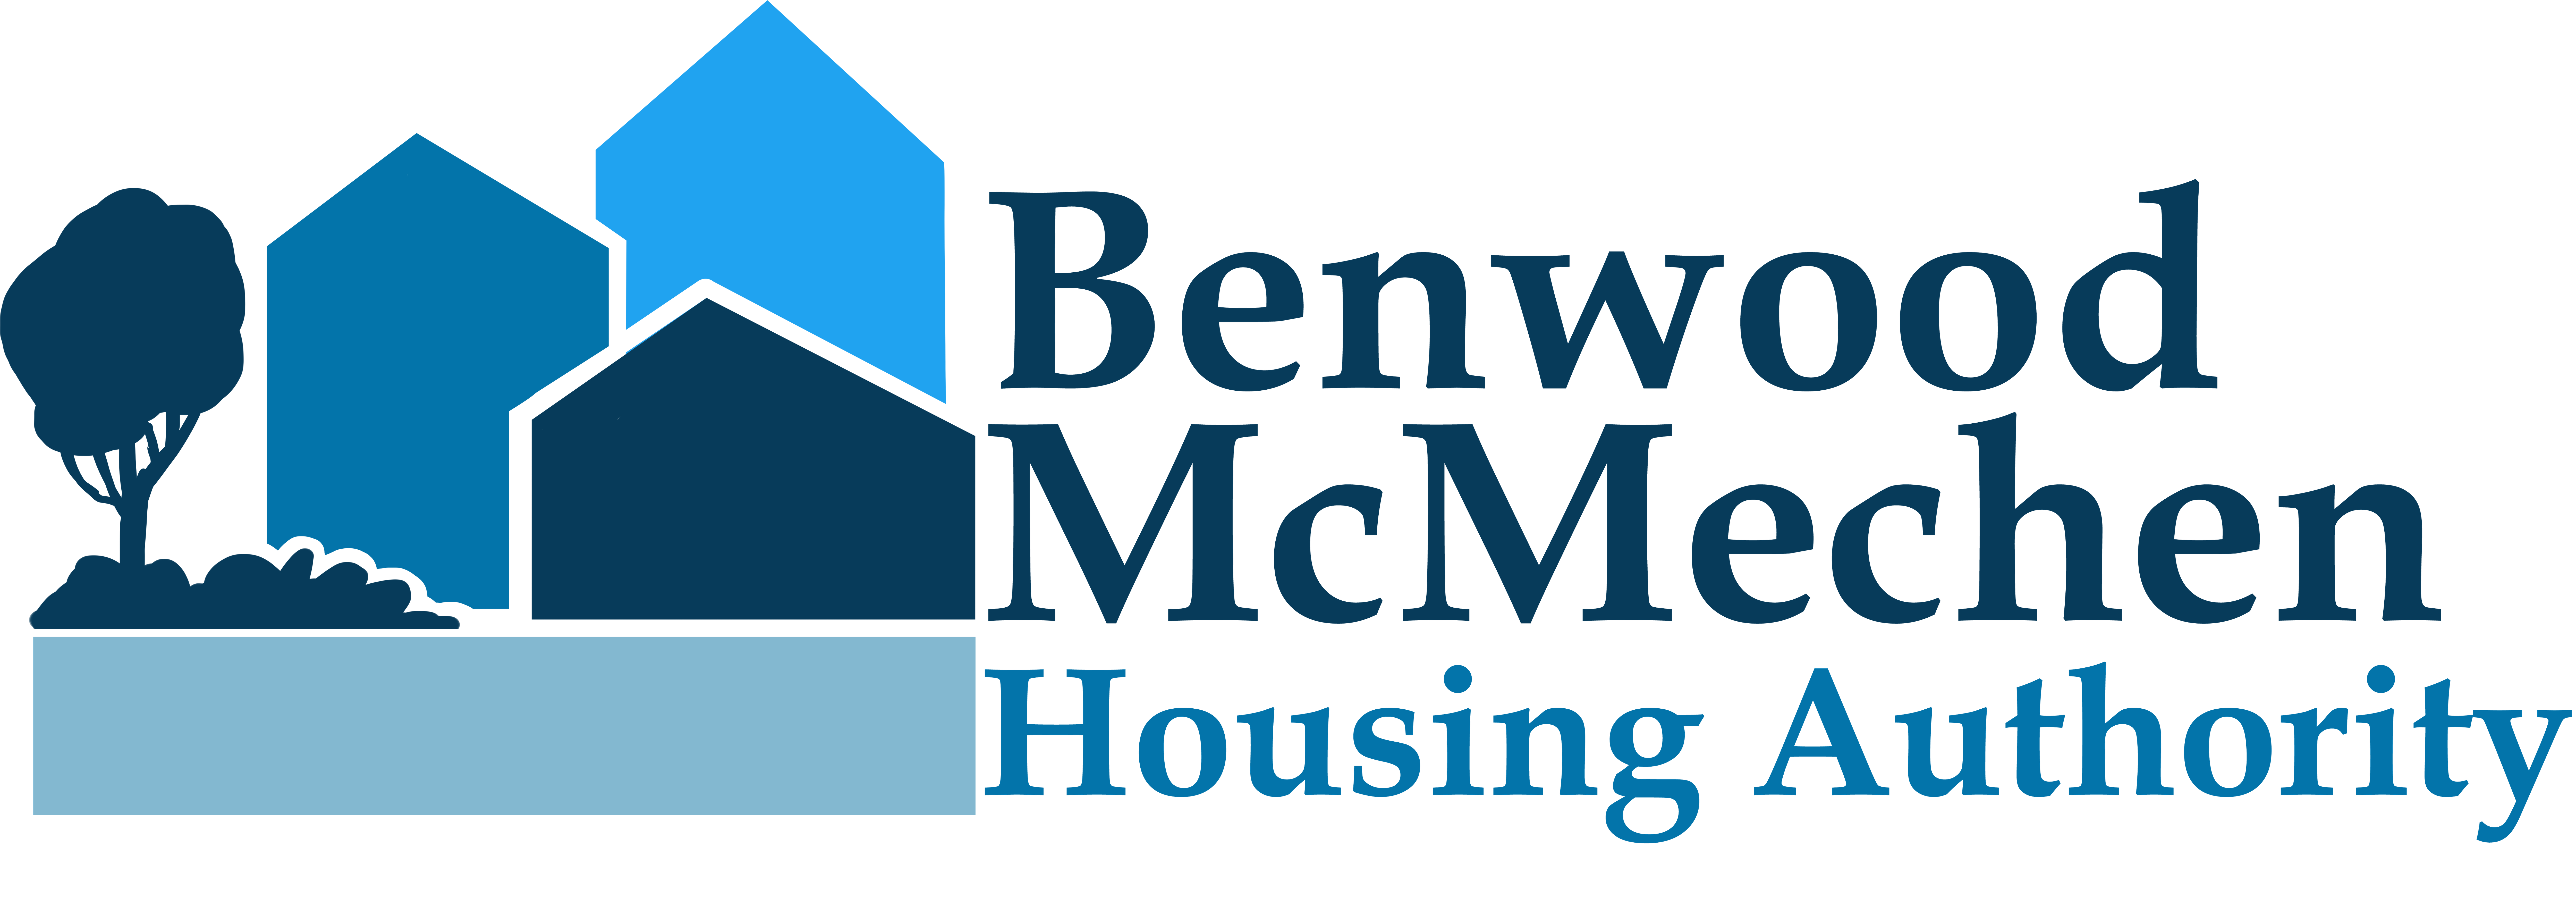 Benwood McMechen Housing Authority